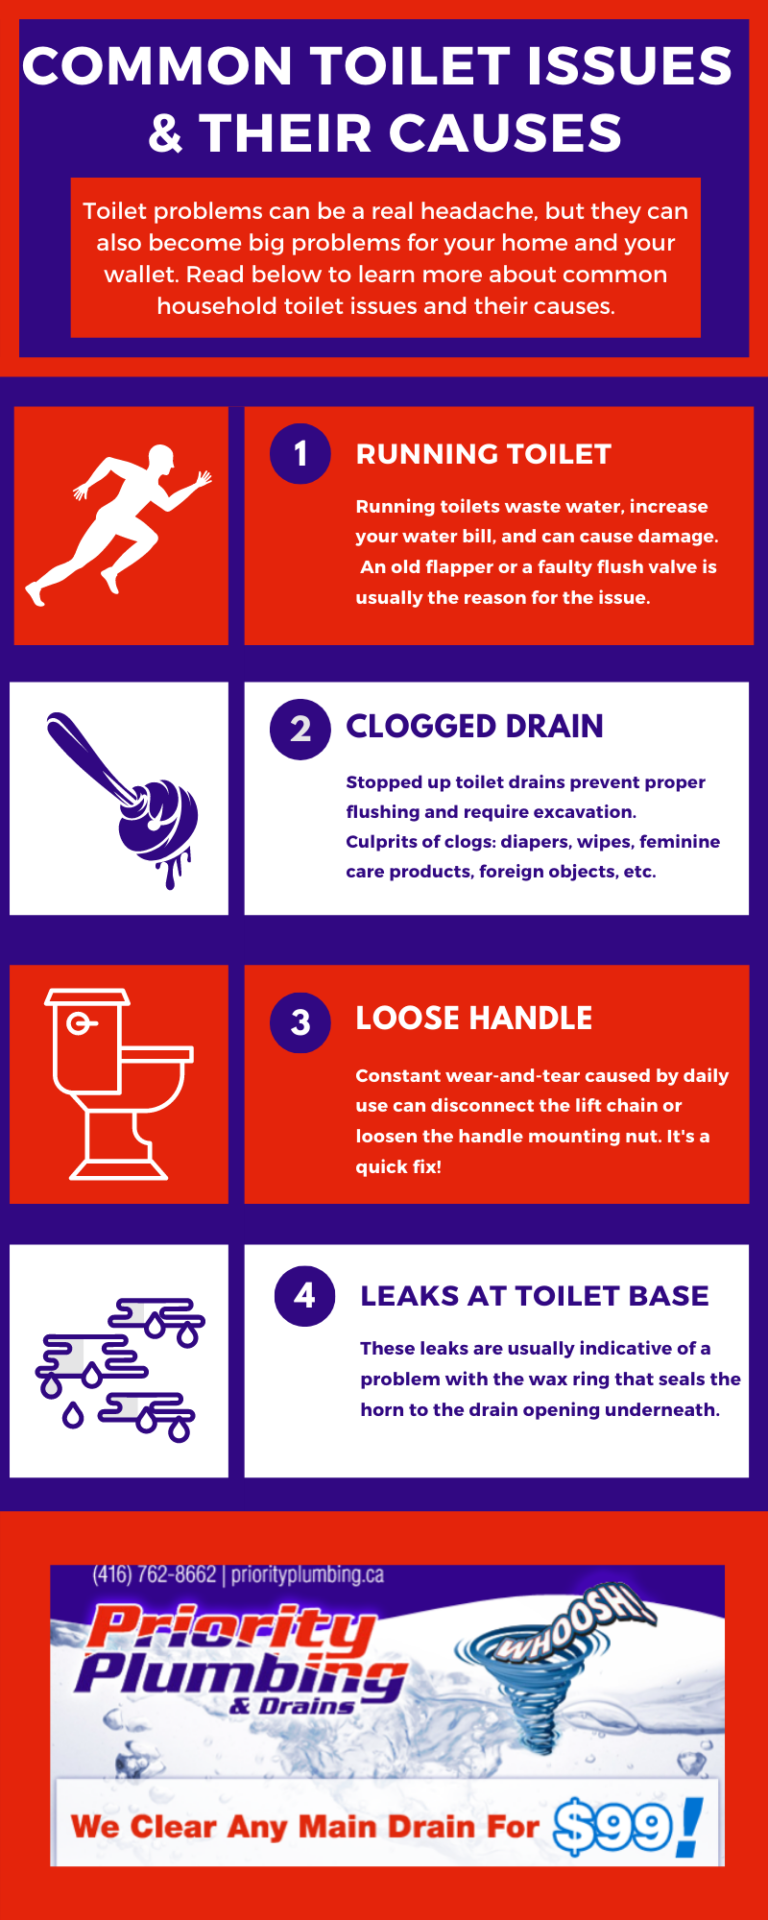 Priority Plumbing - Toilet Issues